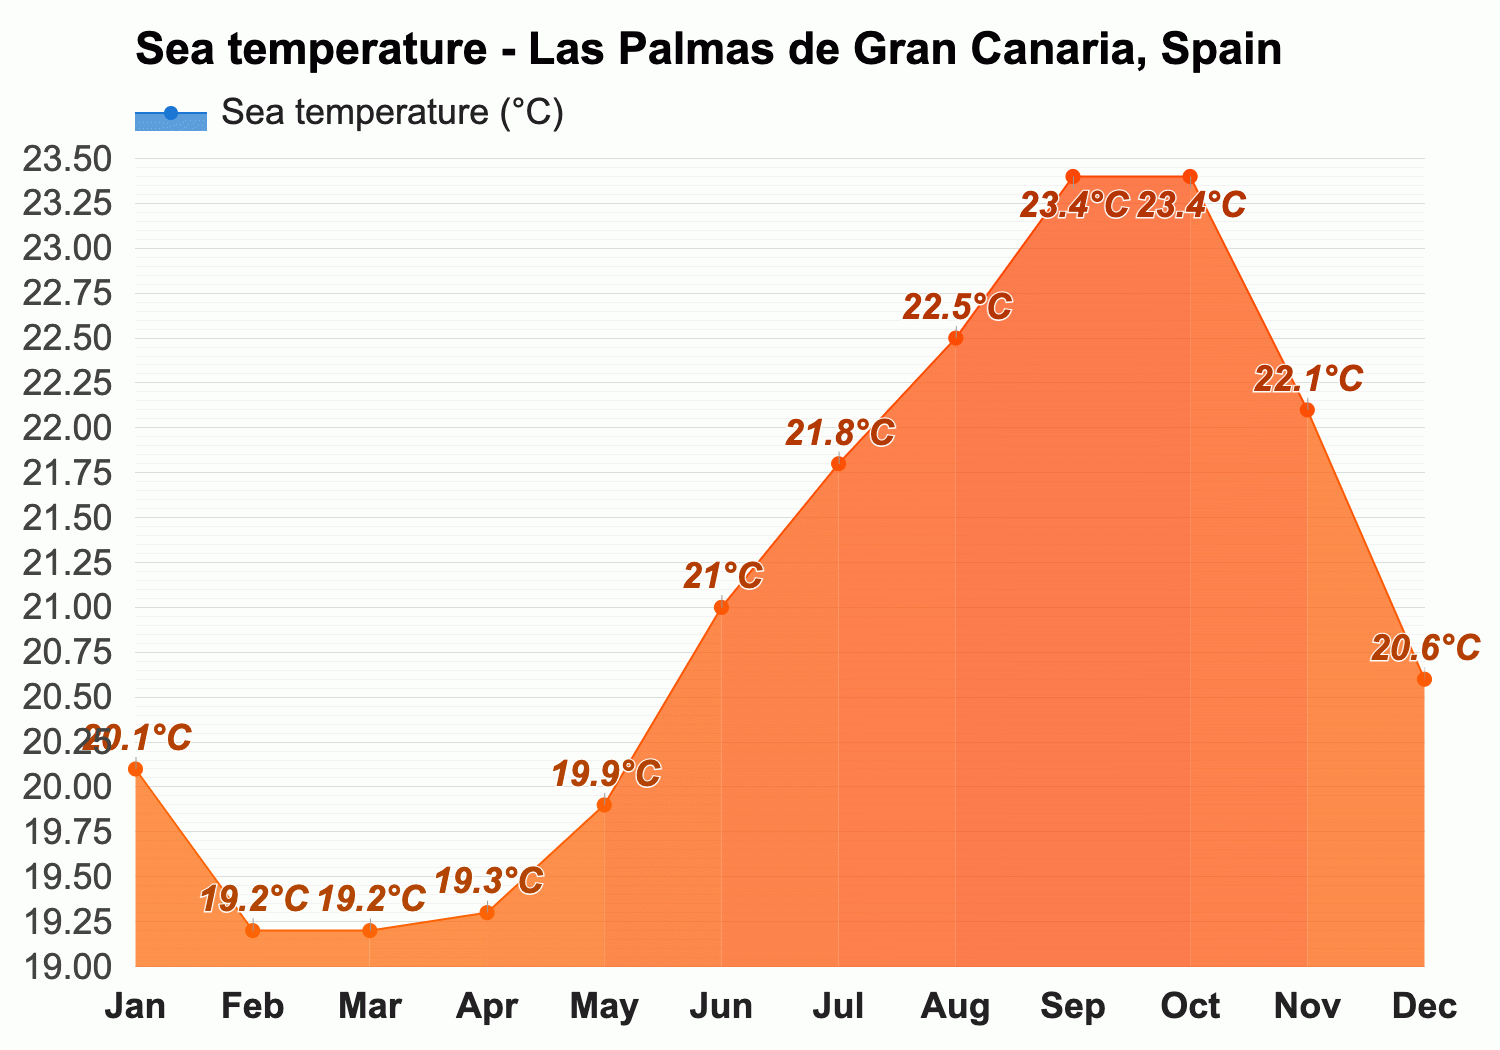 Las Palmas de Gran Canaria, Spain - June weather forecast and climate  information | Weather Atlas